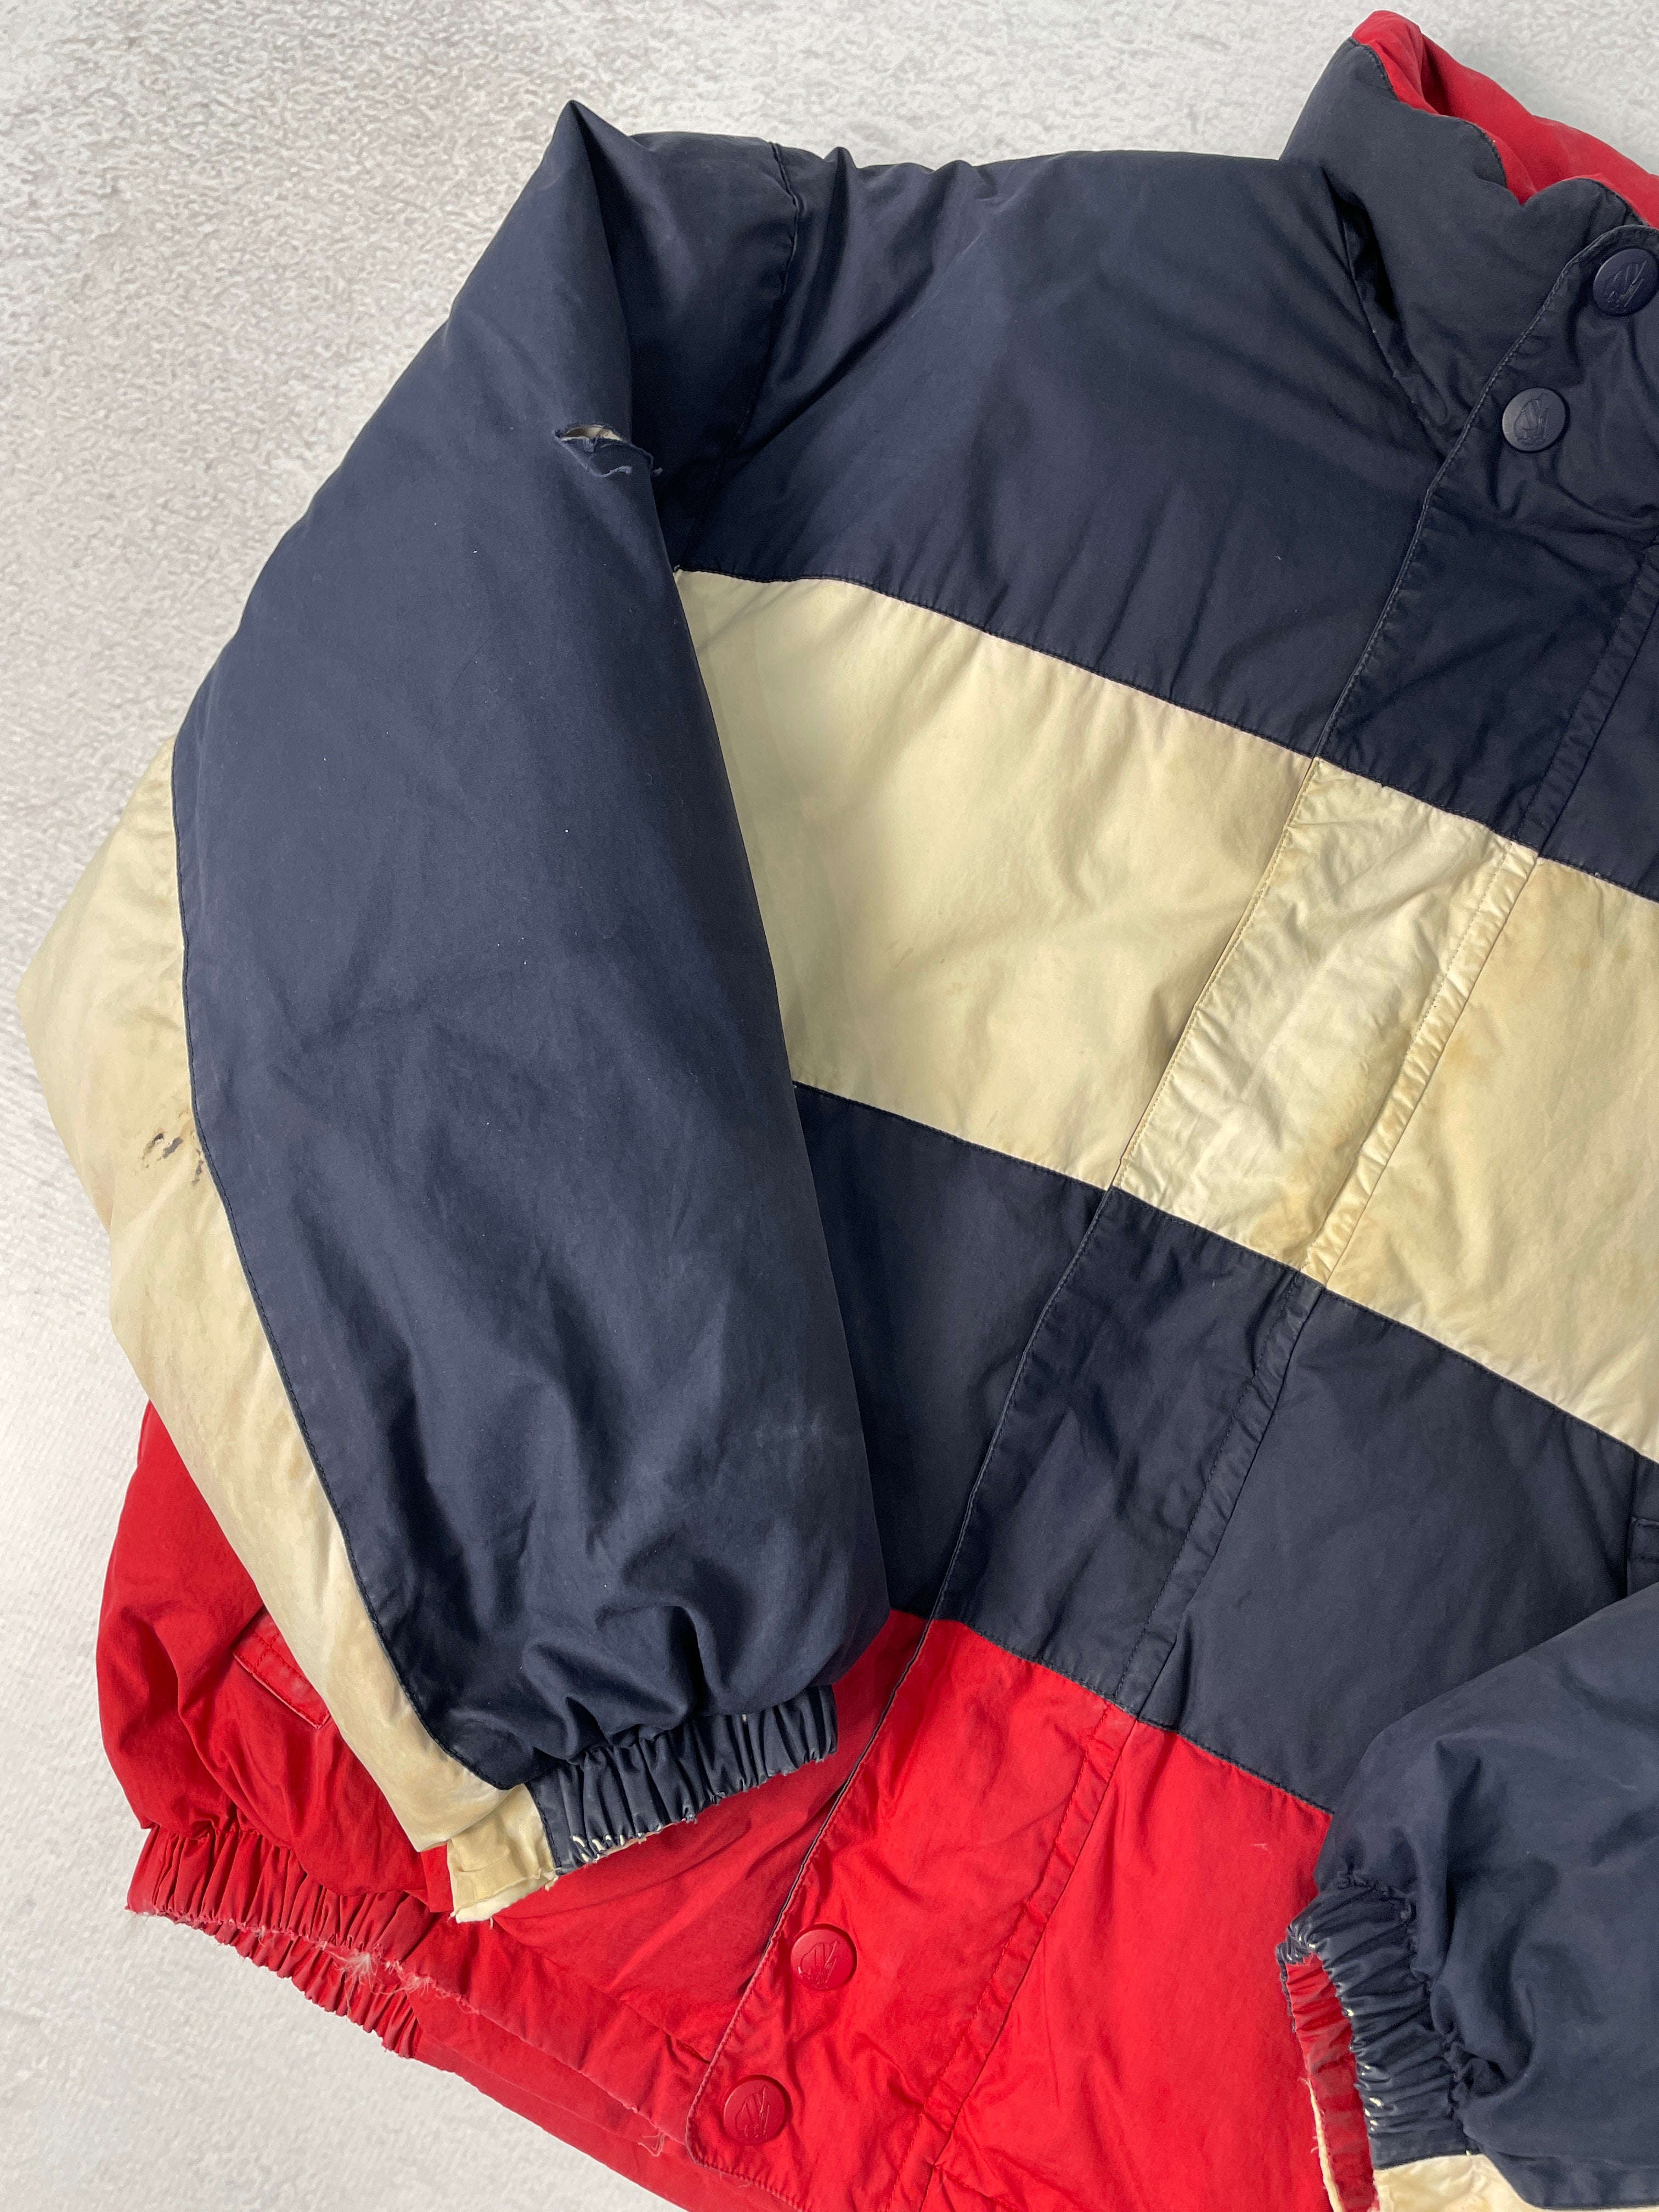 Vintage Nautica Reversible Insulated Jacket - Men's Large